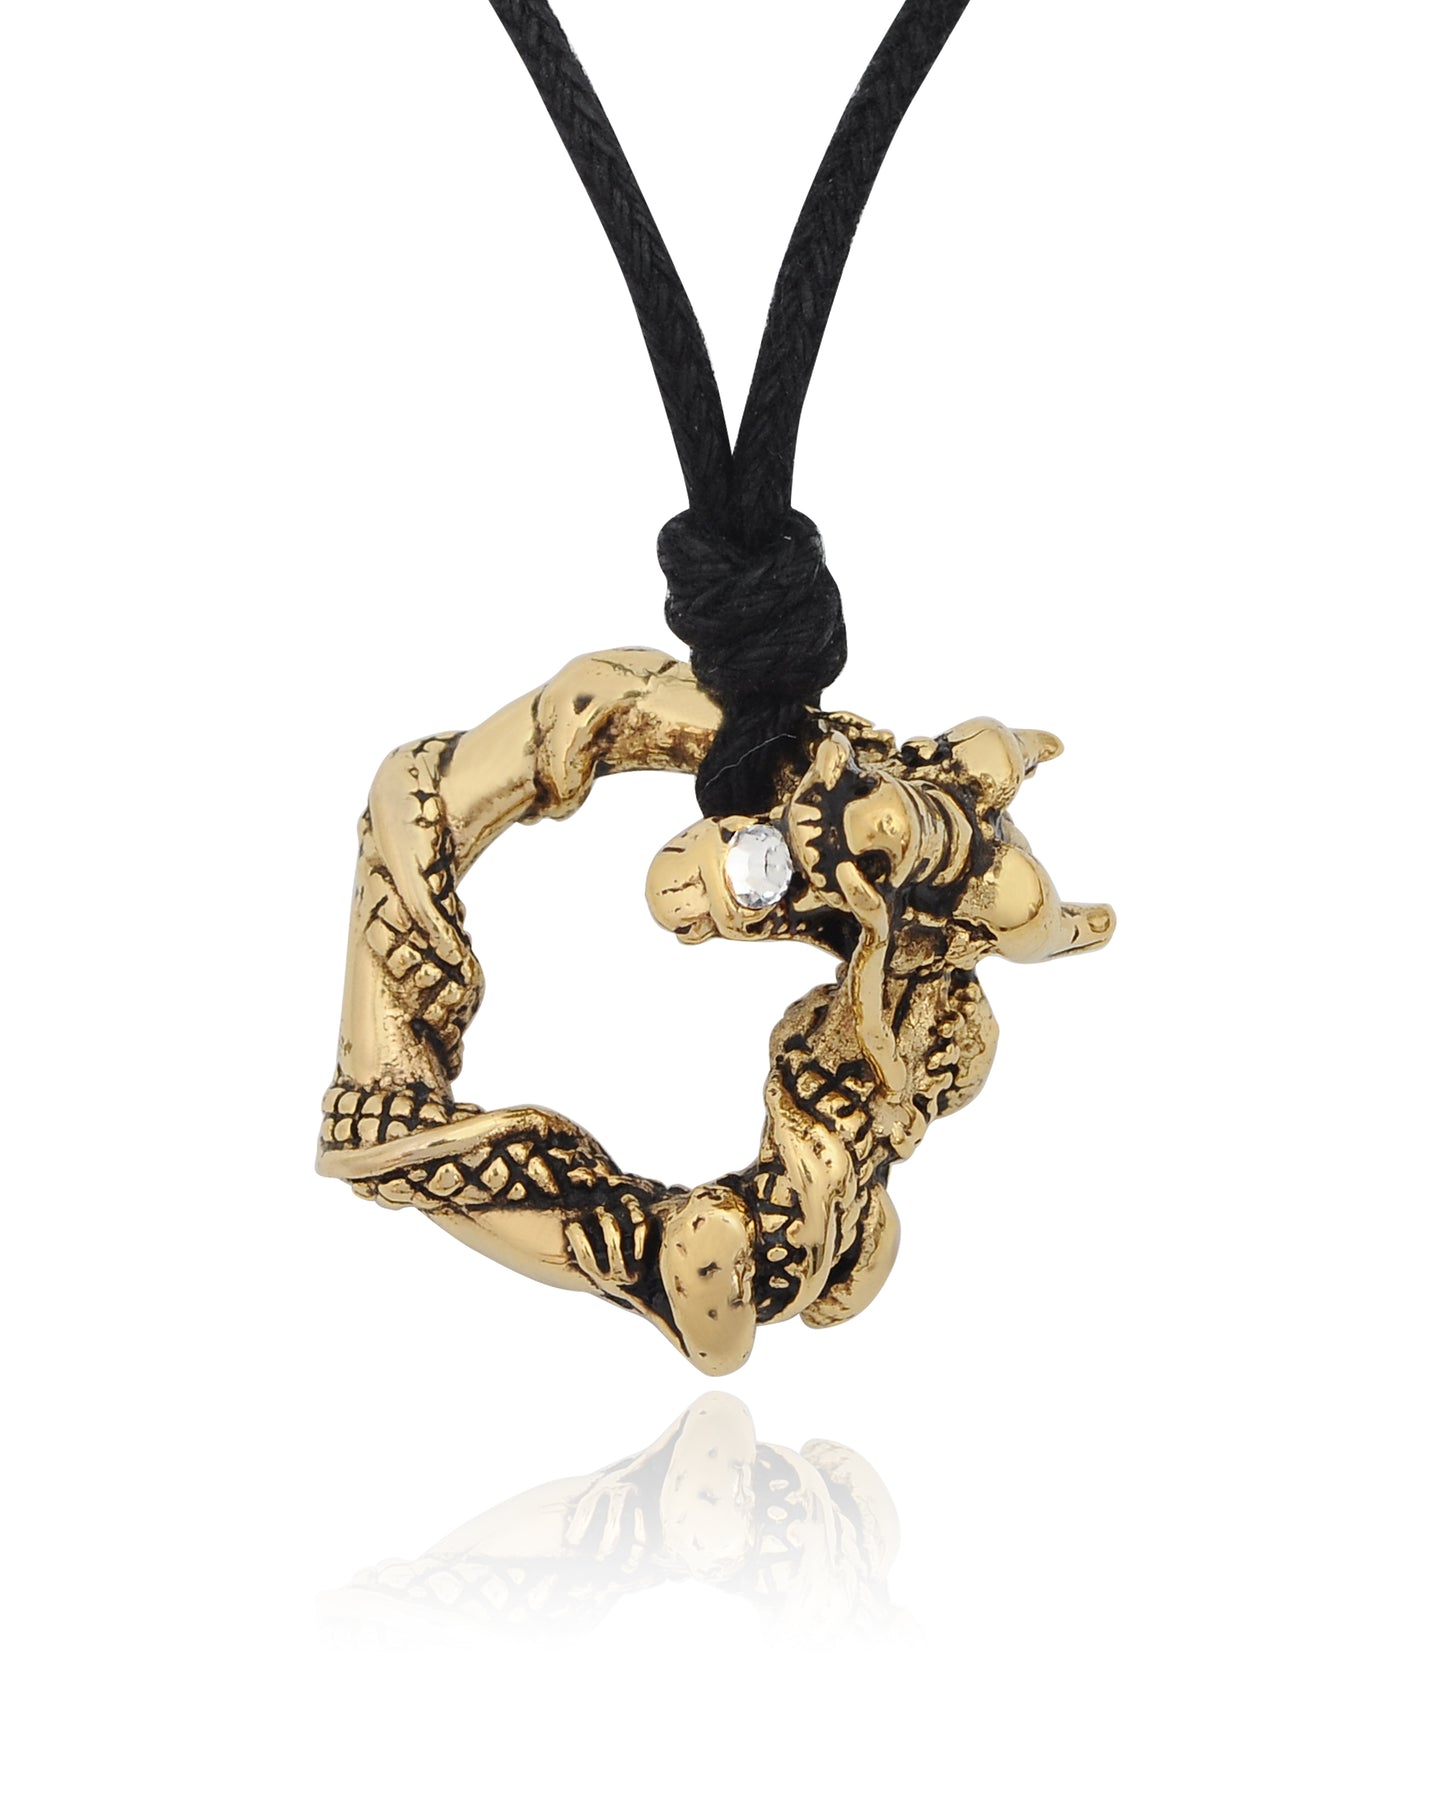 Ouroboros Dragon Handmade Gold Brass Necklace Pendant Jewelry